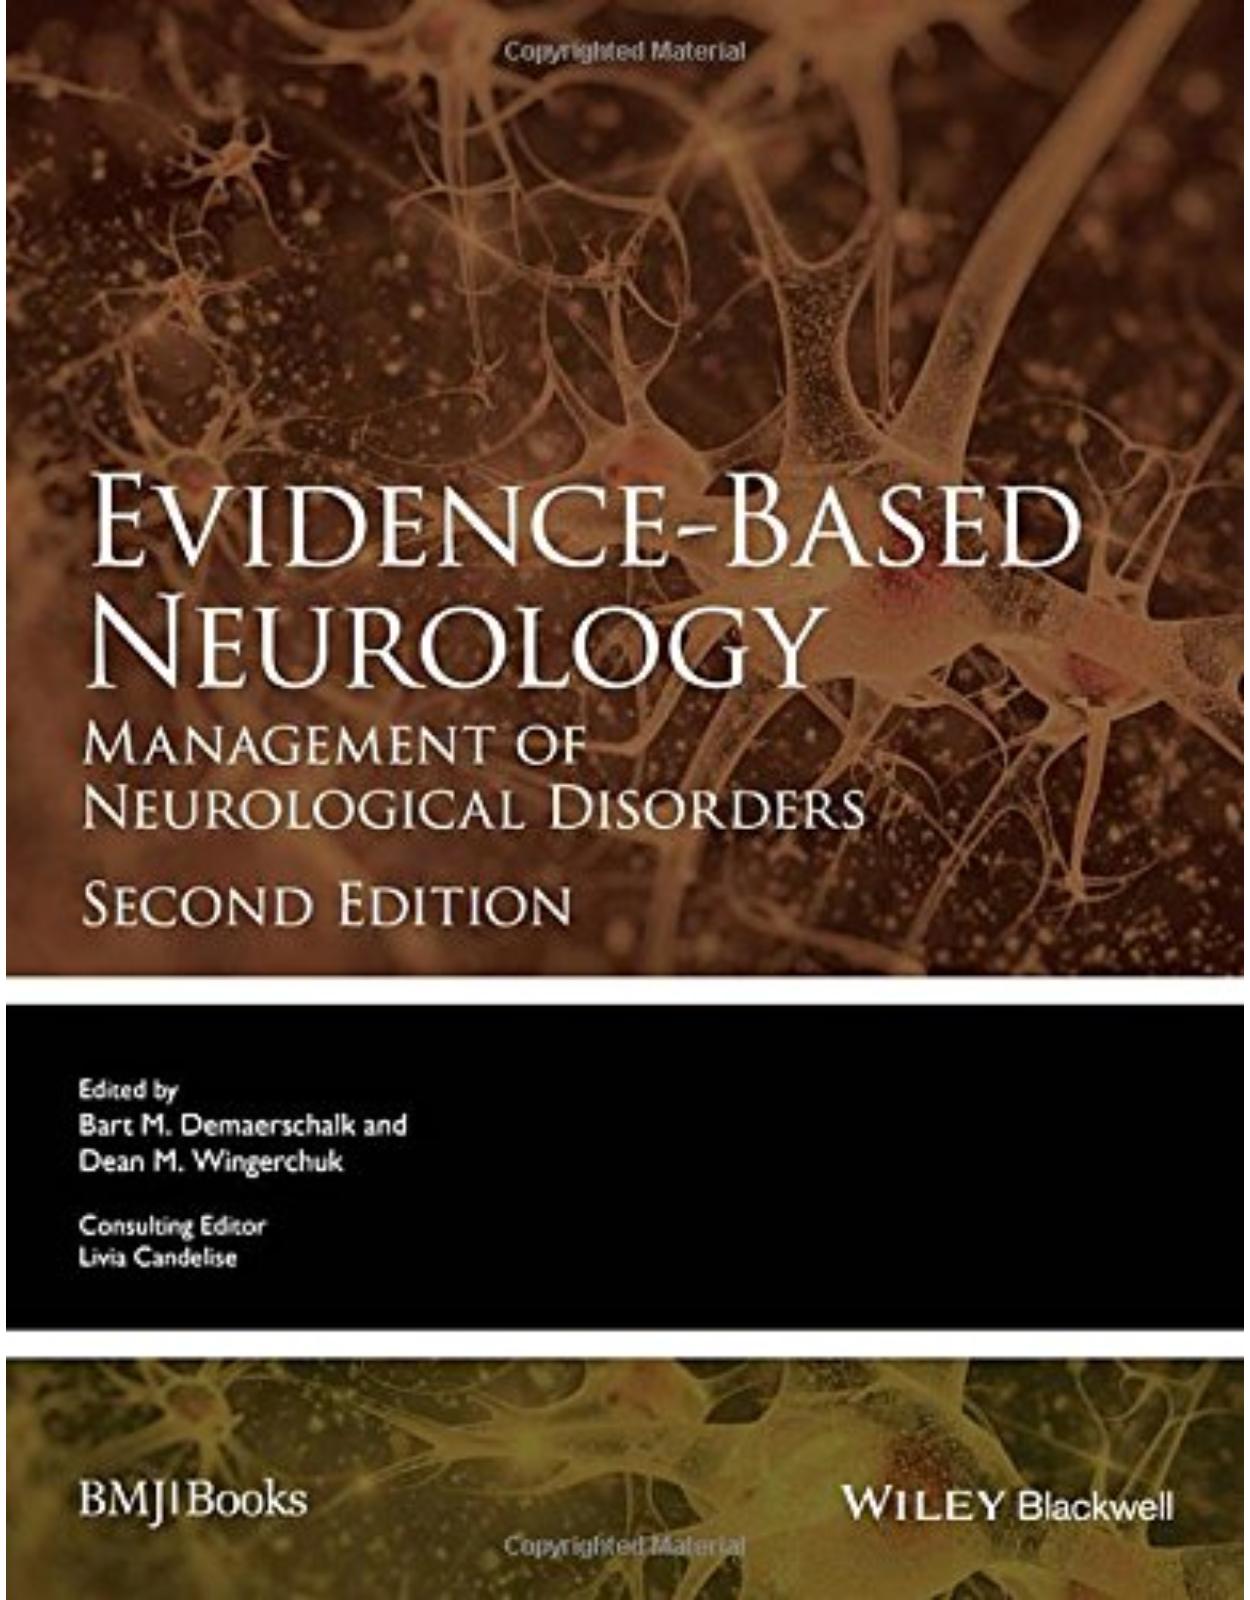  Evidence-Based Neurology: Management of Neurological Disorders, 2nd Edition